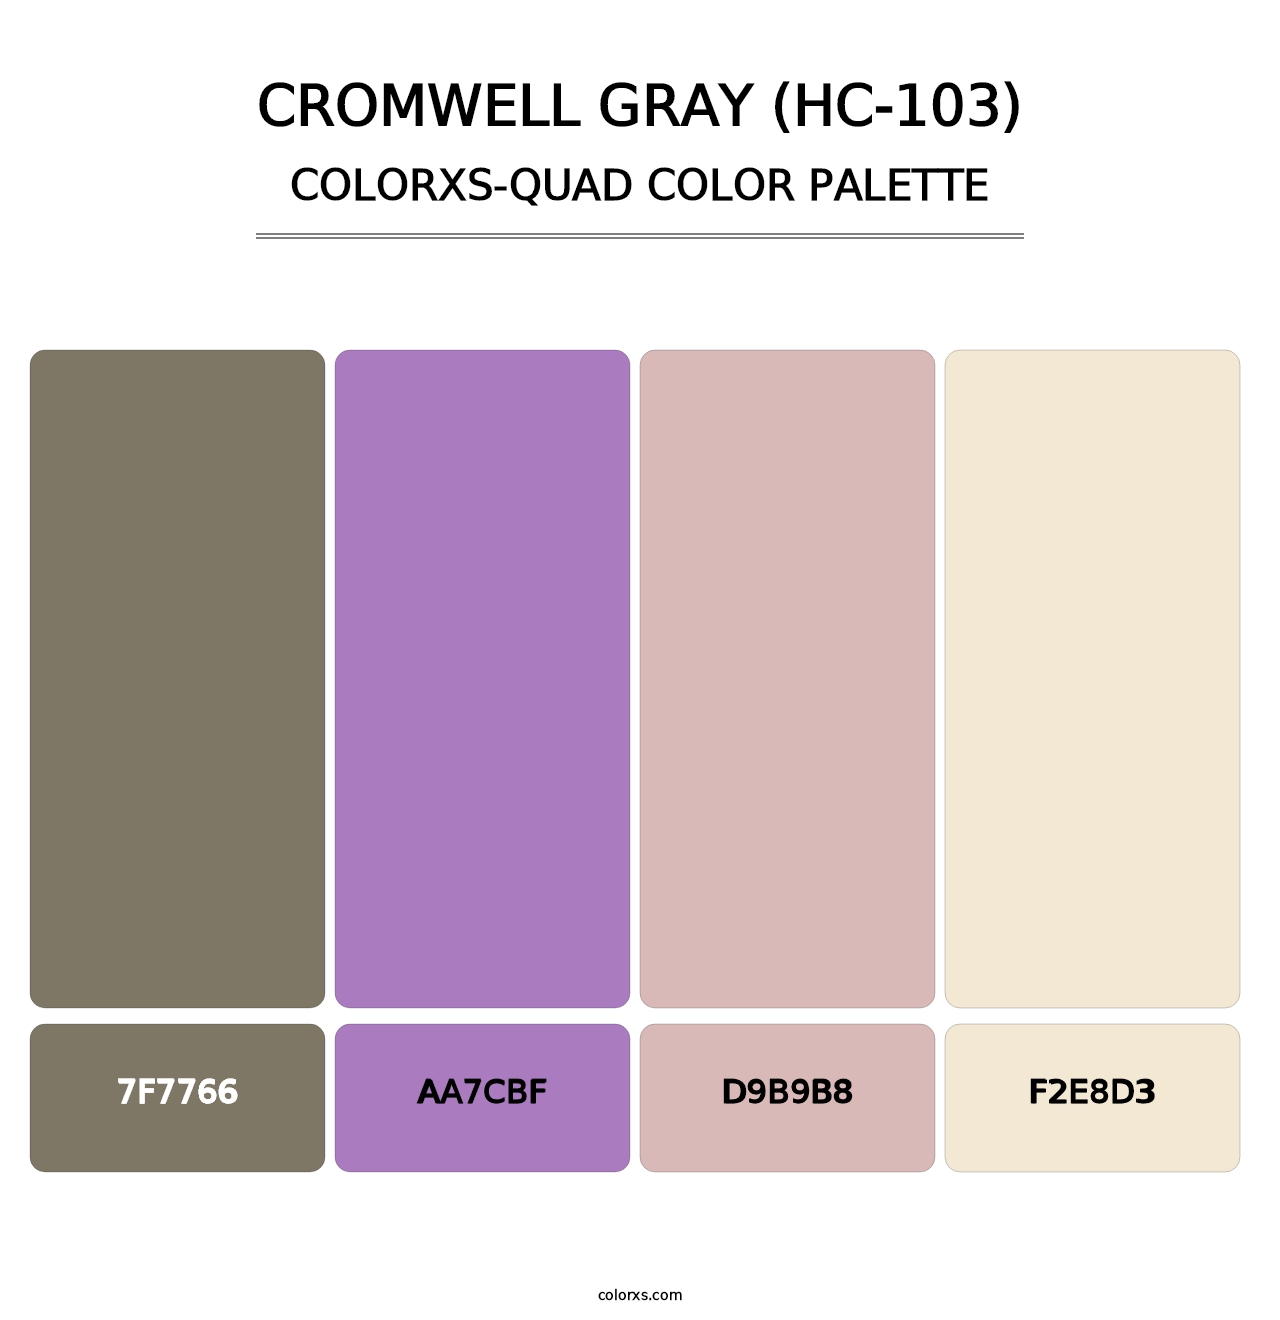 Cromwell Gray (HC-103) - Colorxs Quad Palette